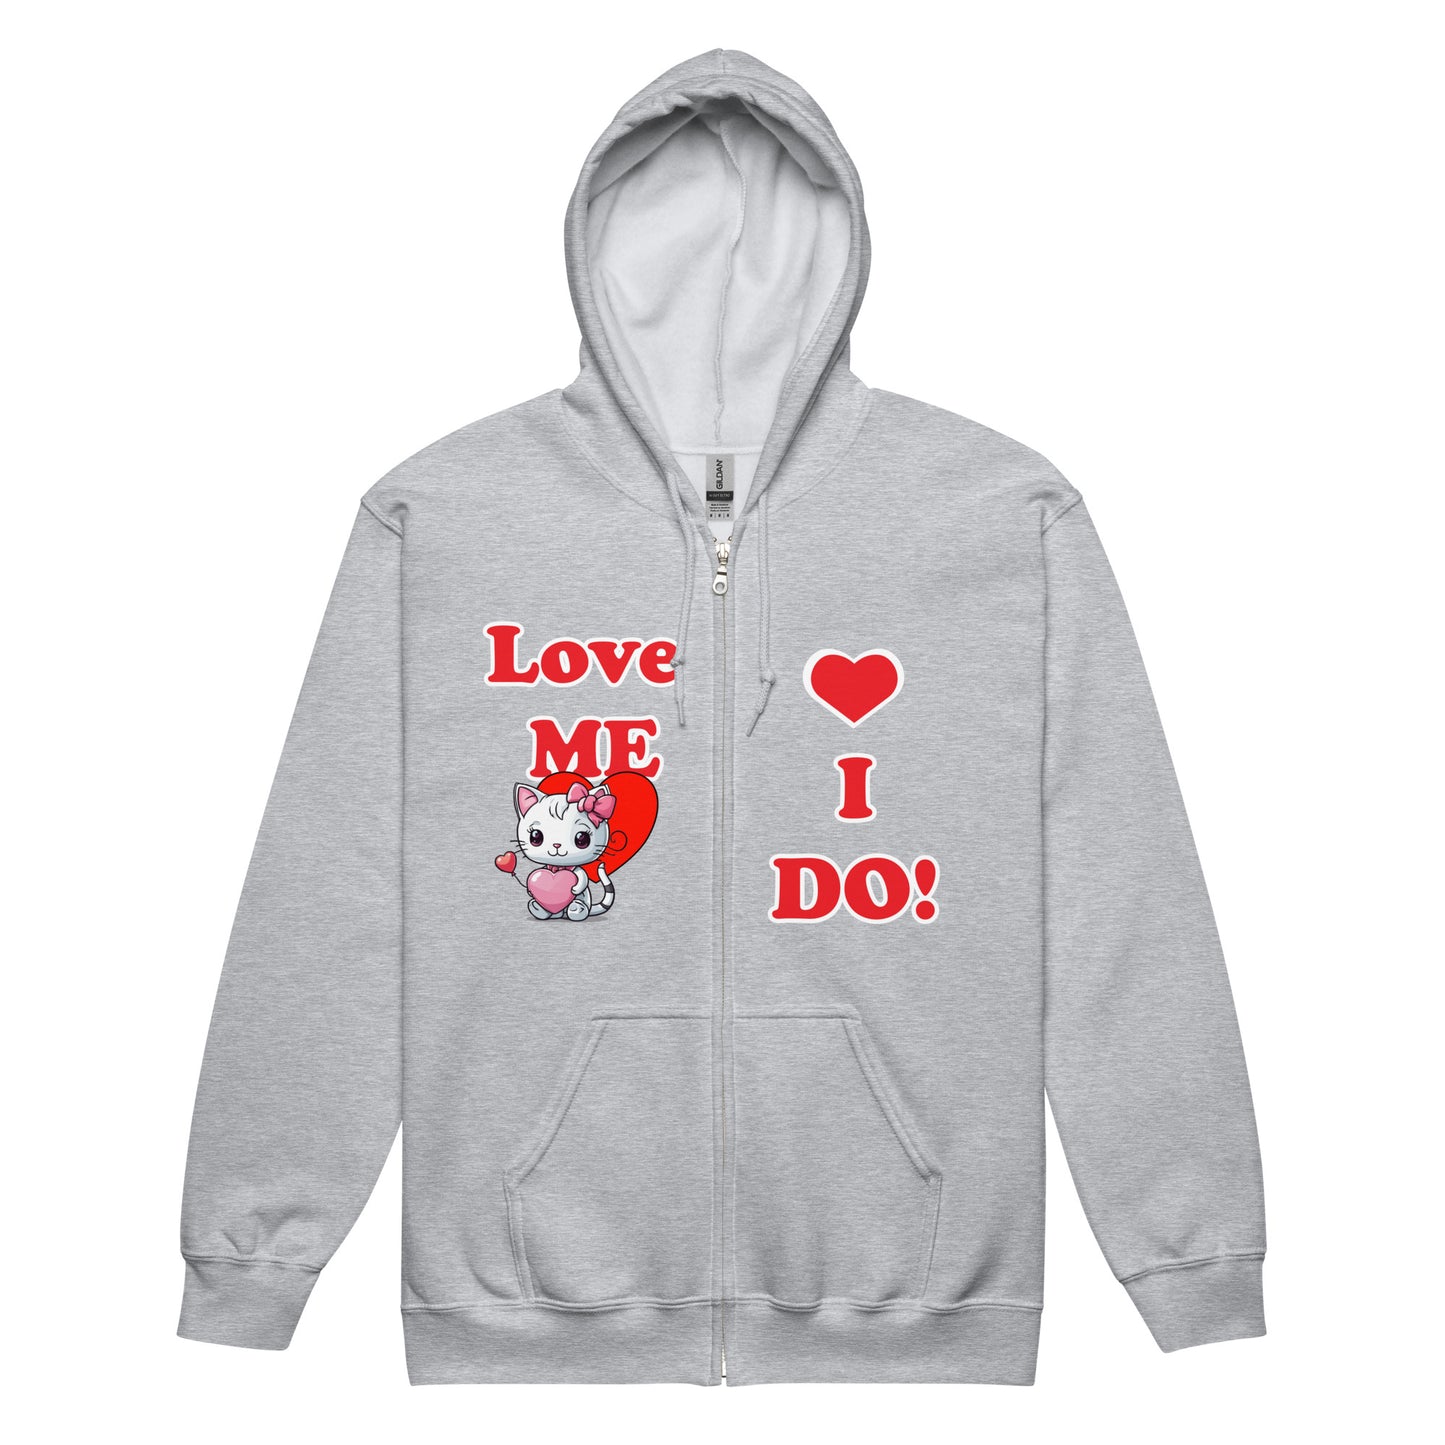 Love me, I do!Unisex heavy blend zip hoodie